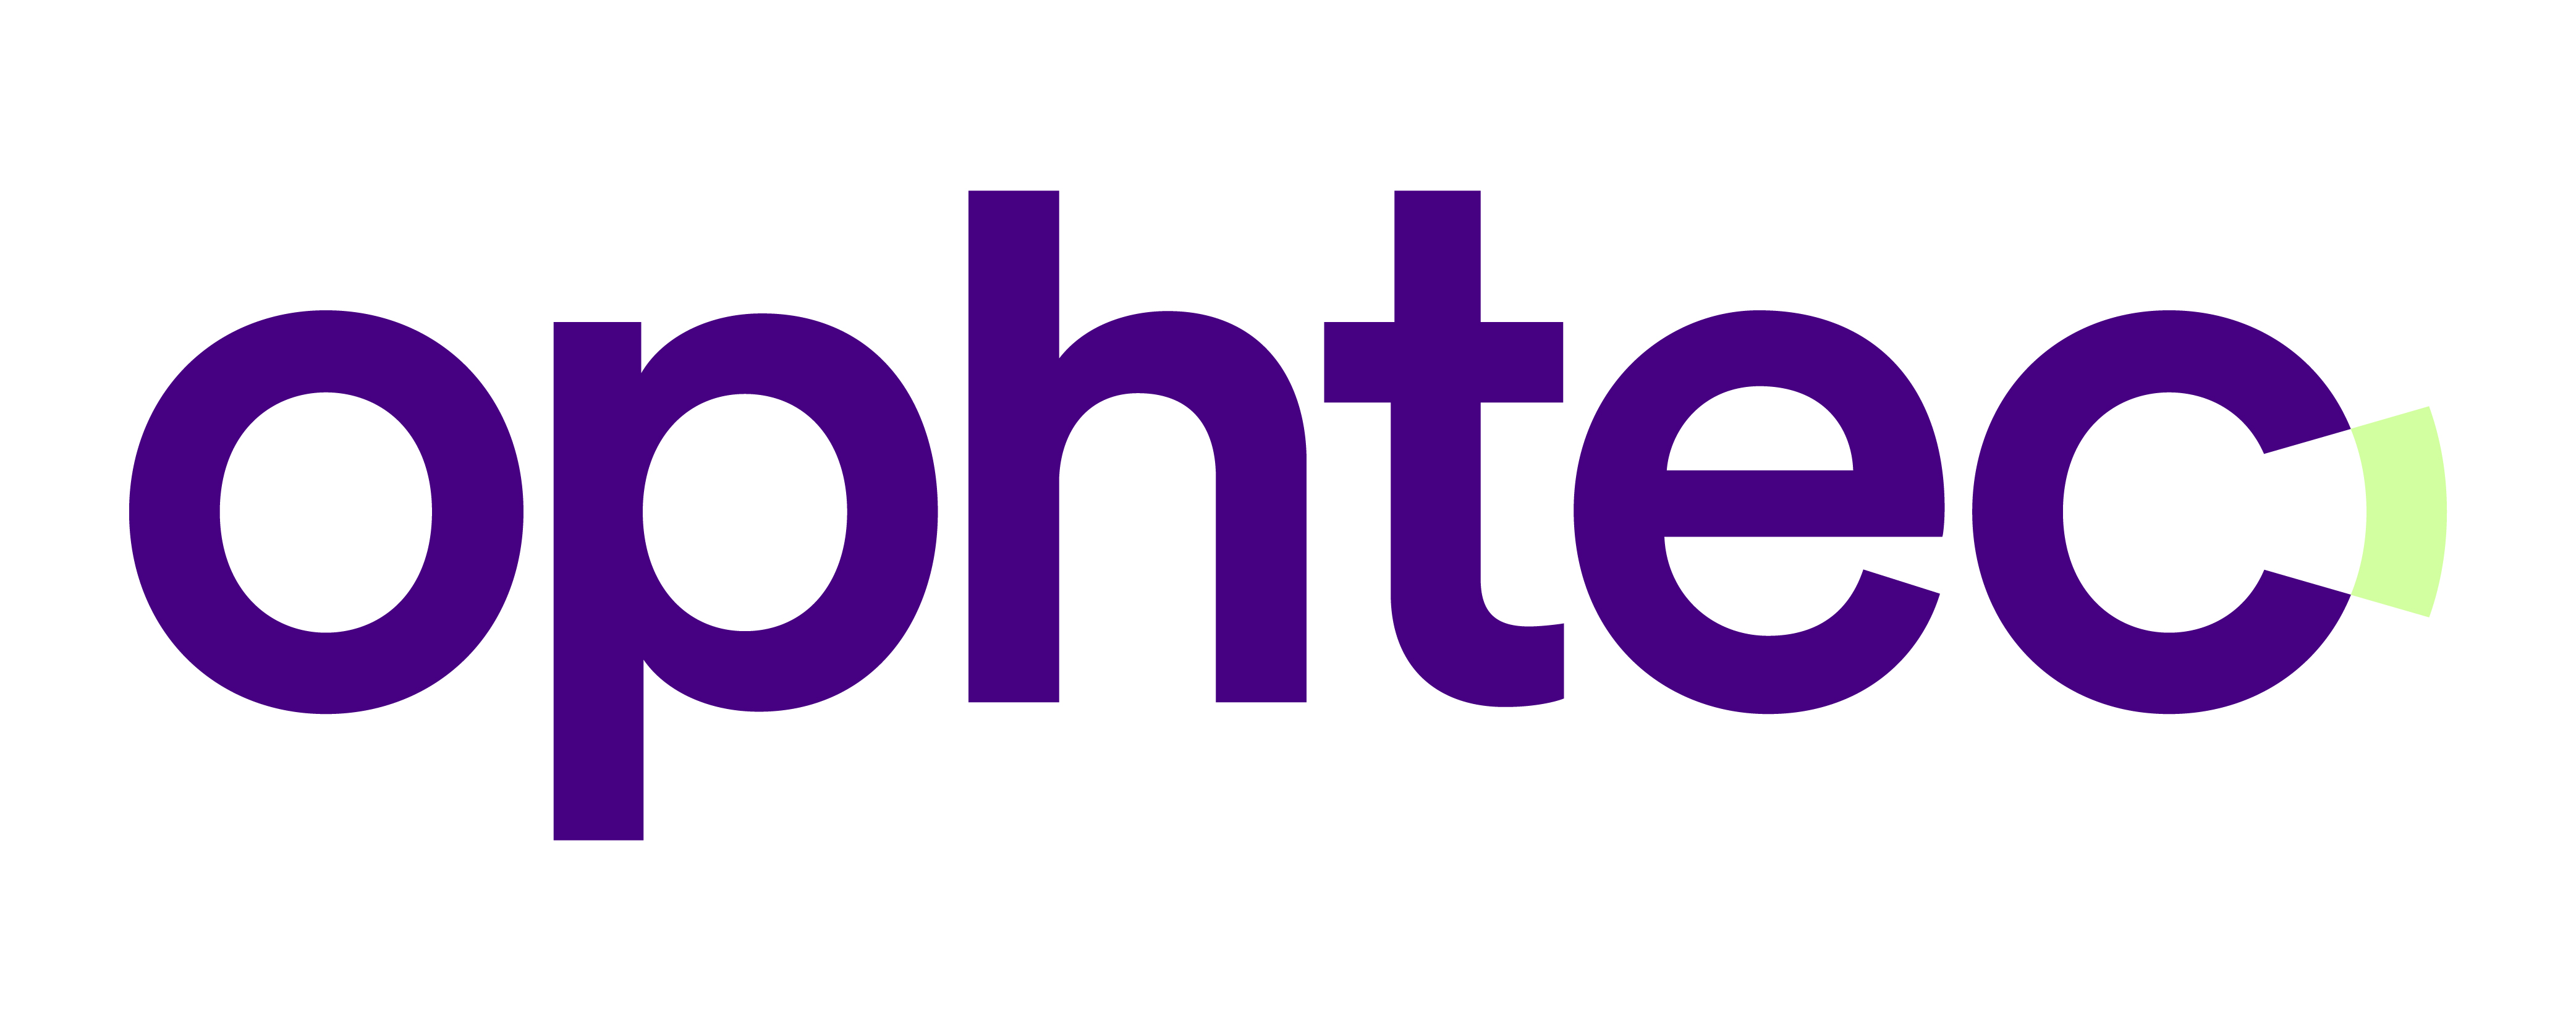 OPHTEC GmbH